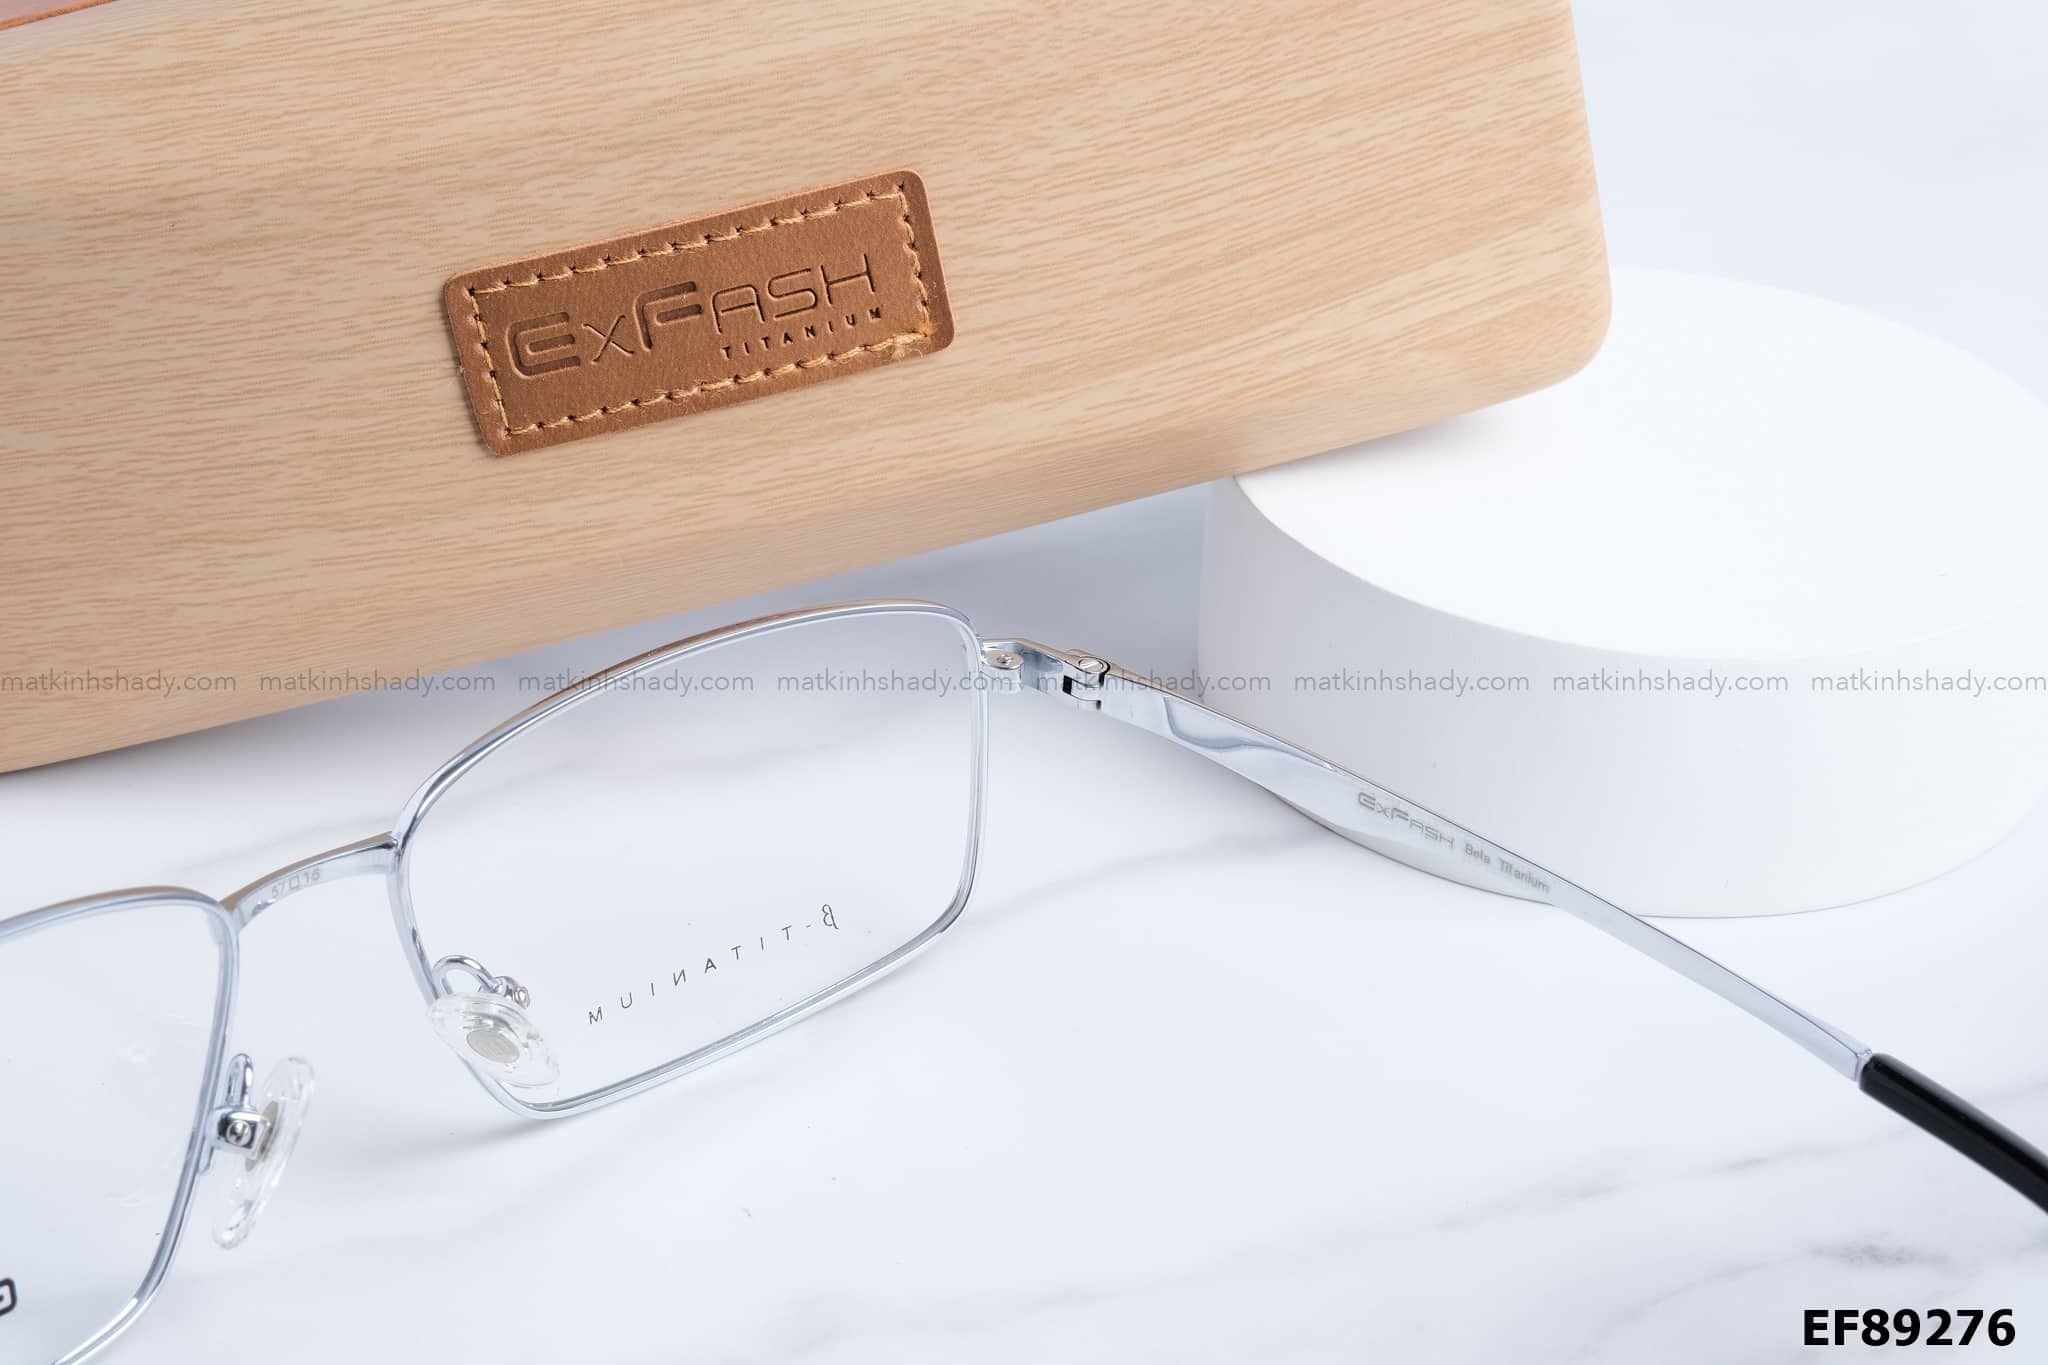  Exfash Eyewear - Glasses - EF89276 